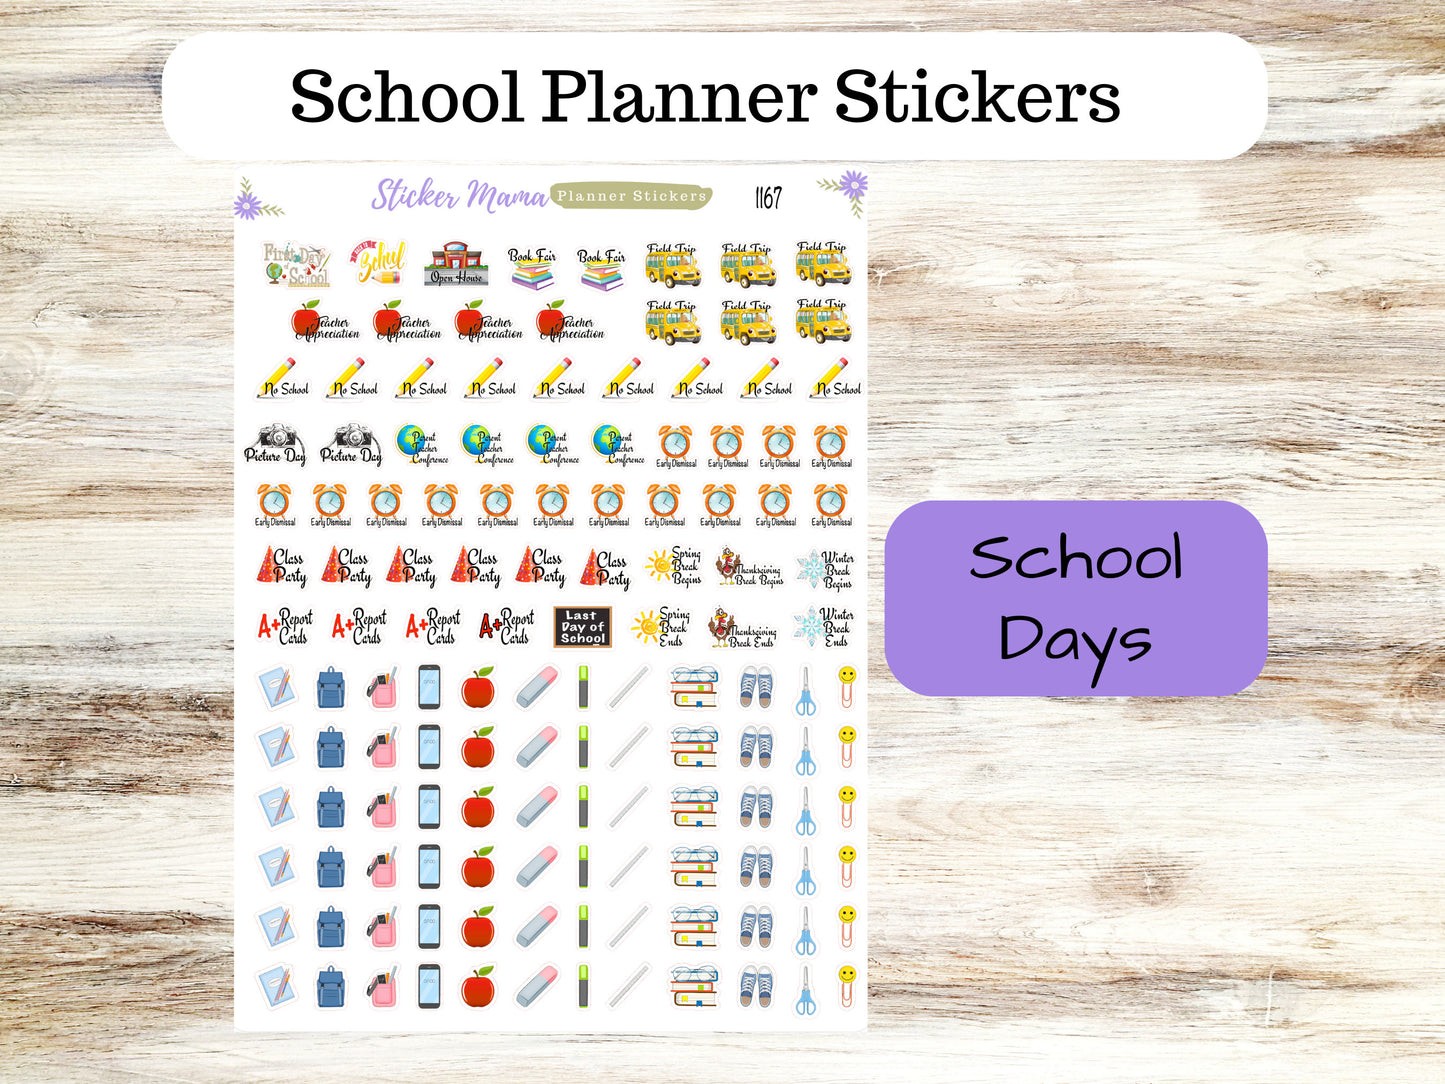 SCHOOL PLANNER STICKERS 1167, School Stickers, Back to School Stickers, Functional Stickers, School Planner, Planner Stickers,